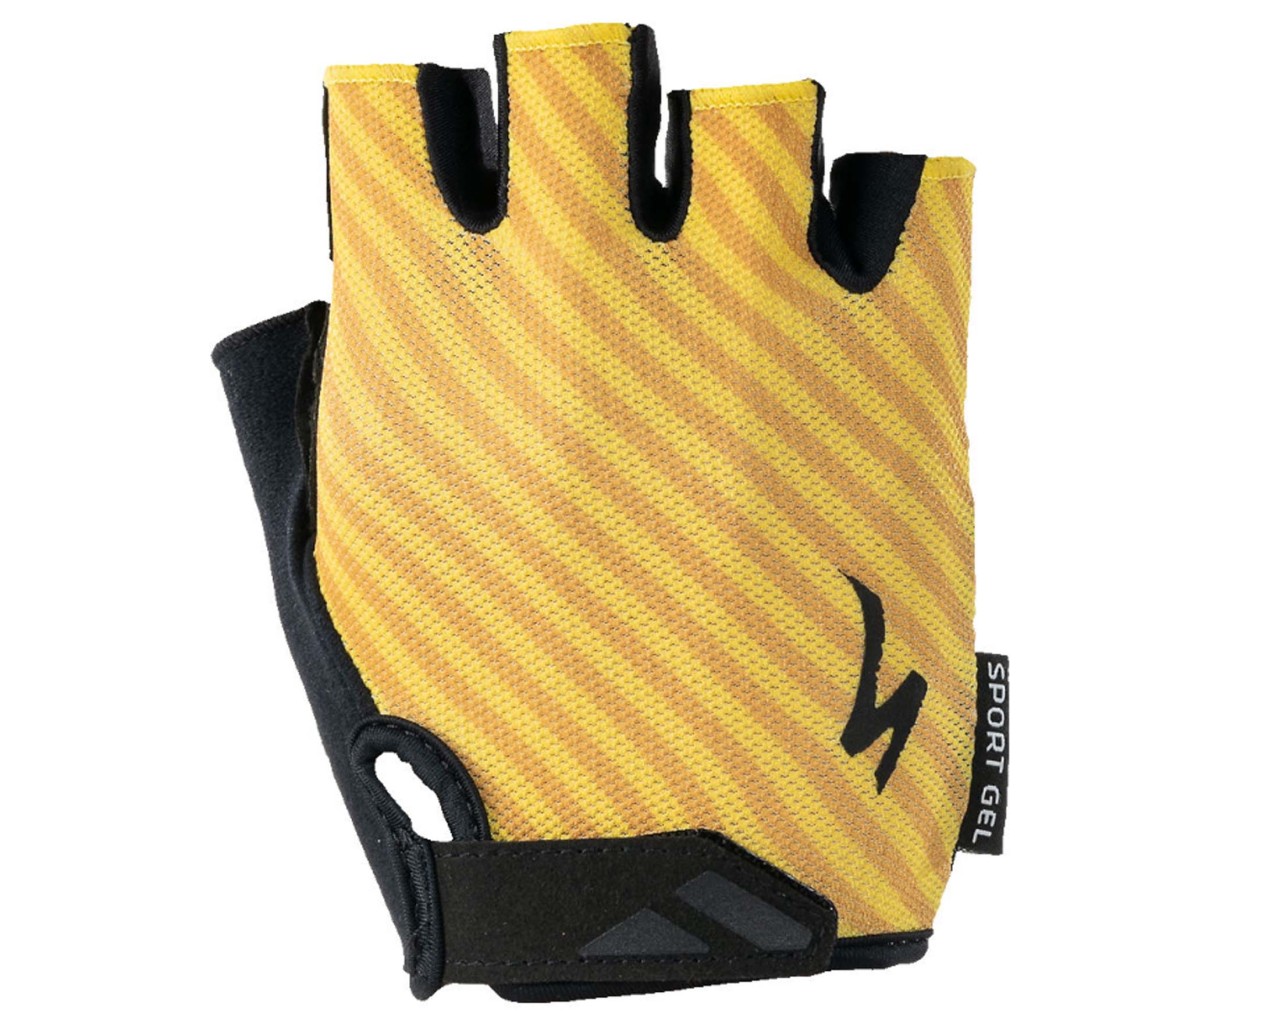 Specialized BG Sport Gel Gloves short fingers | brassy yellow stripe